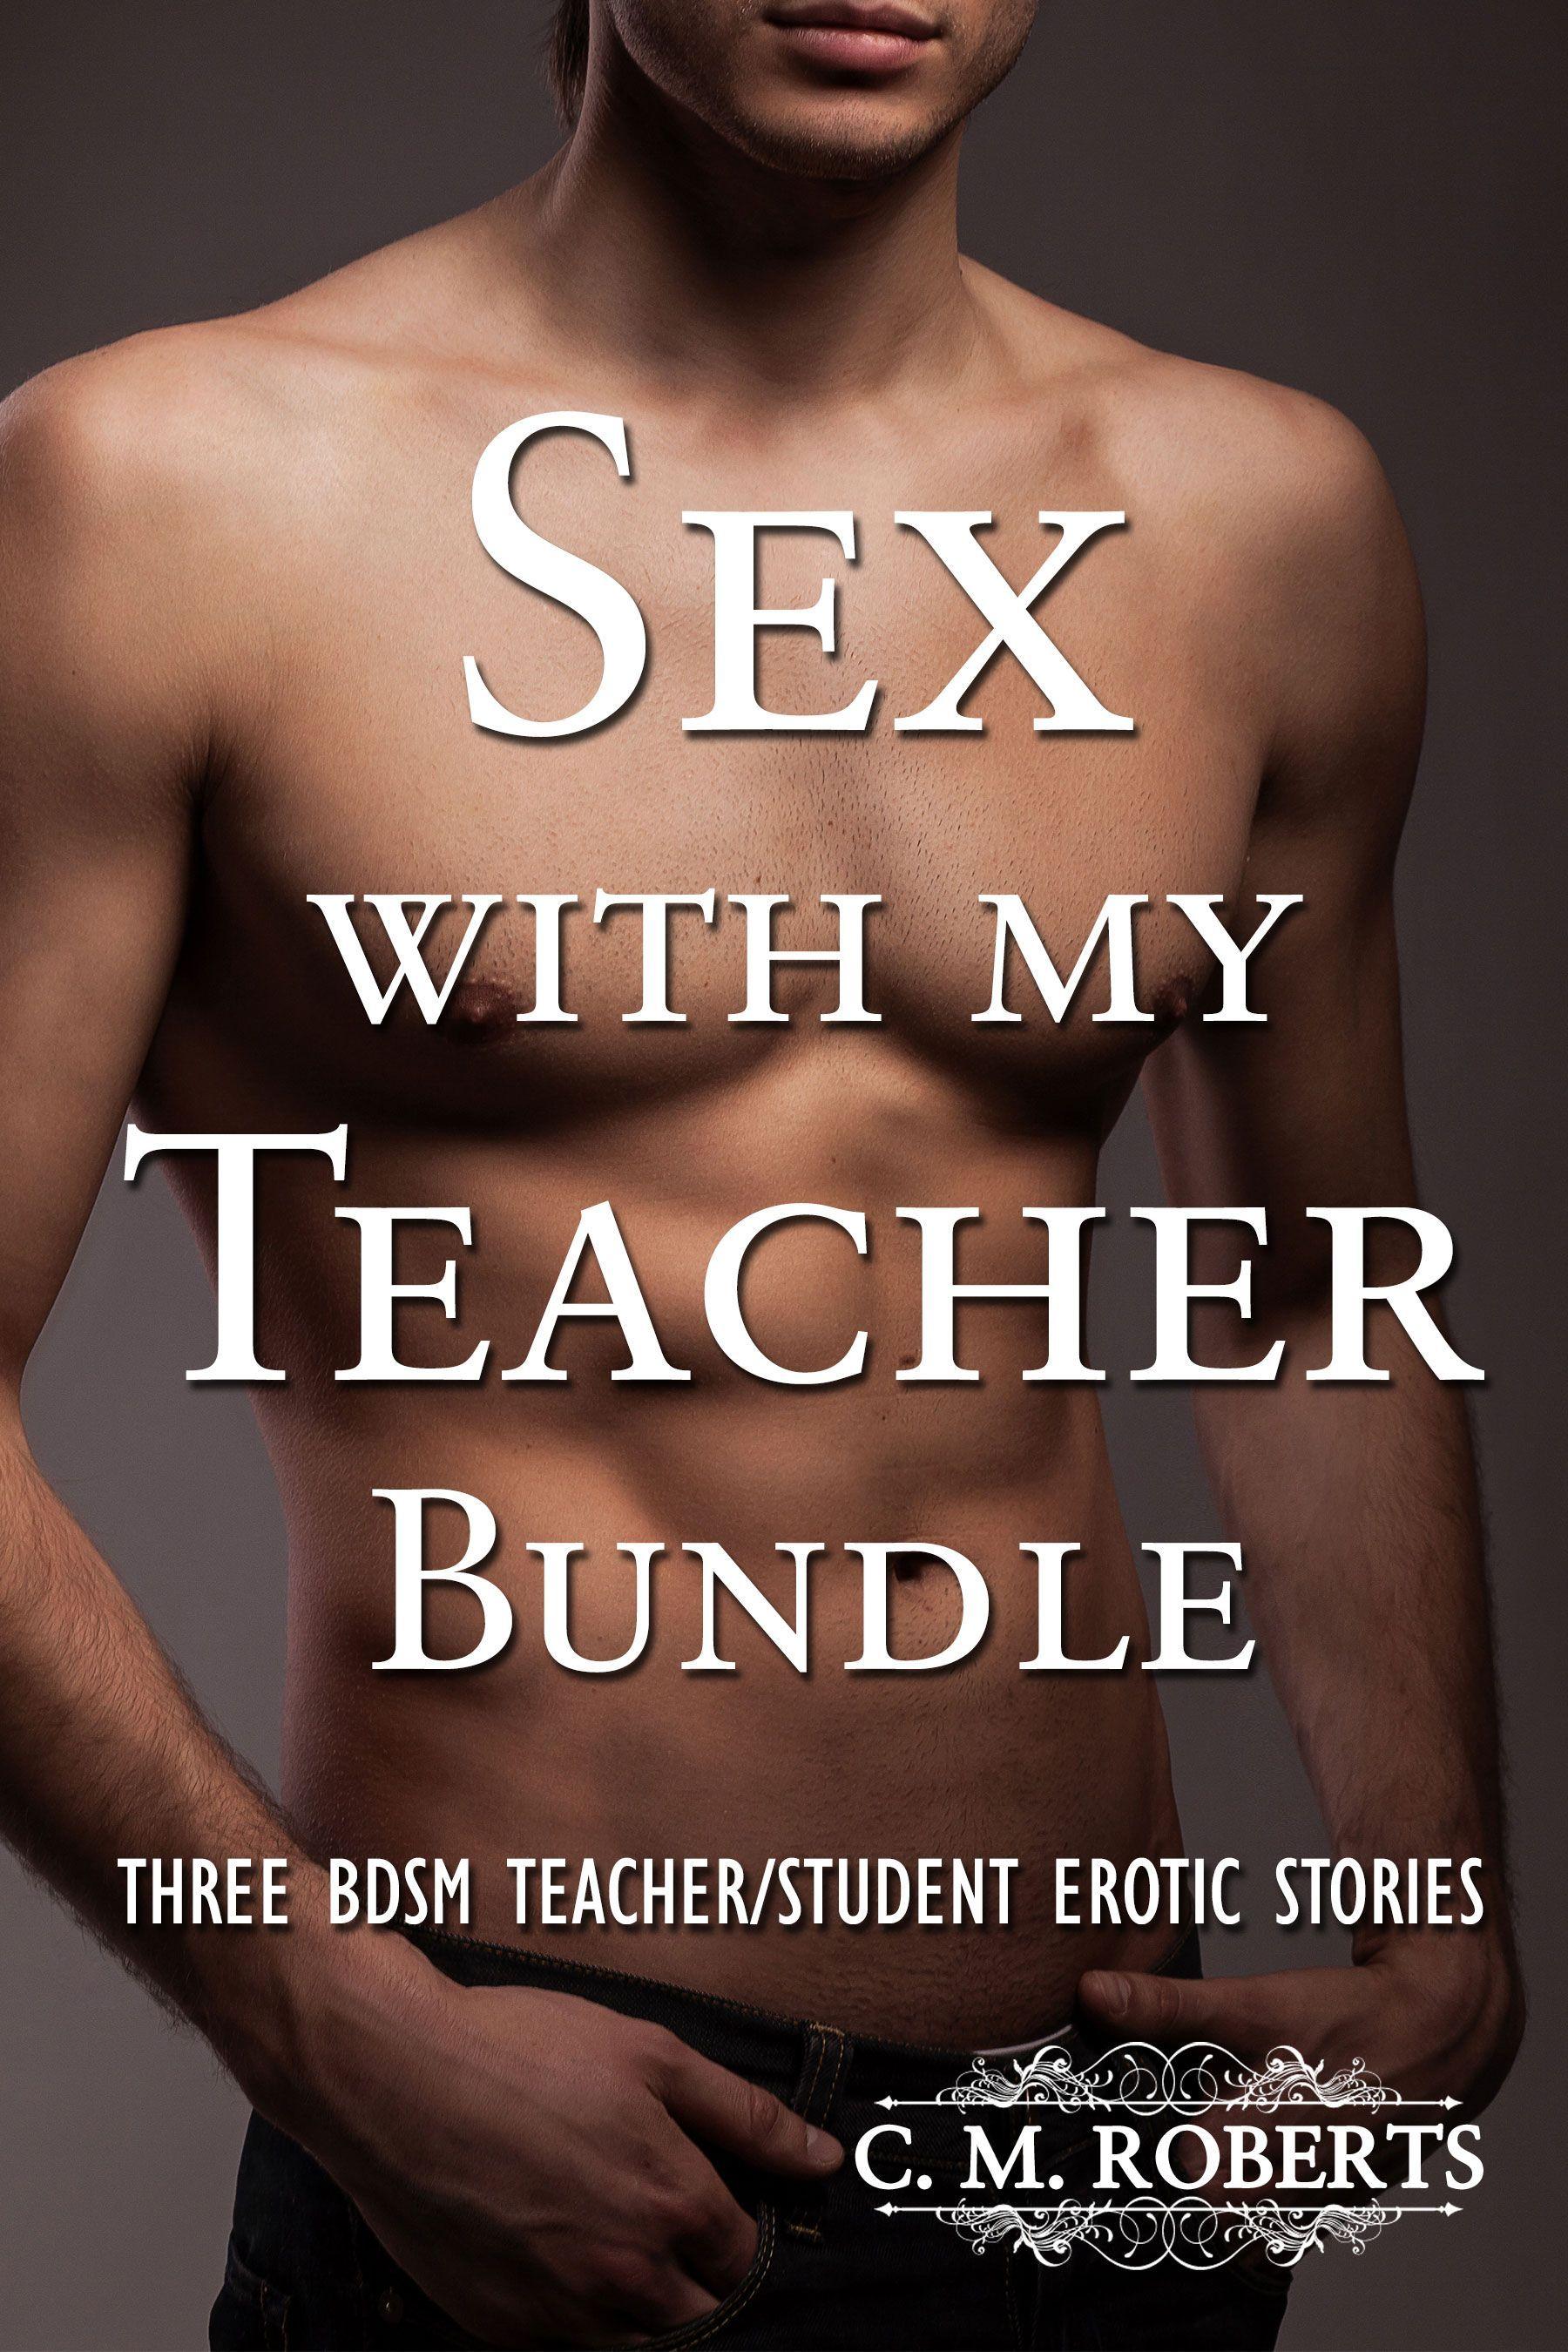 Erotic tutor story